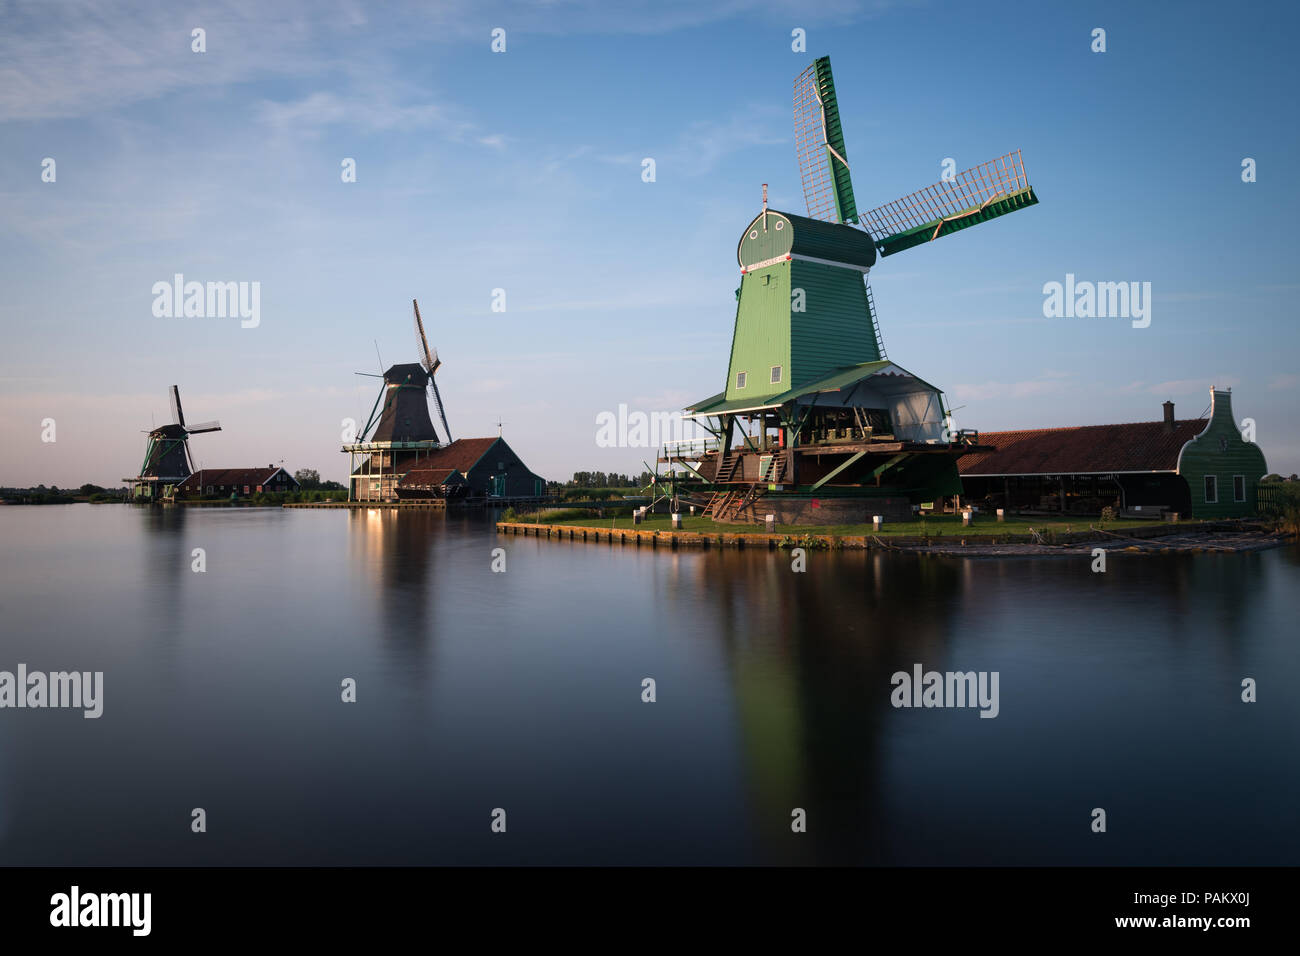 The windmills of Zaanse Schans, Netherlands Stock Photo